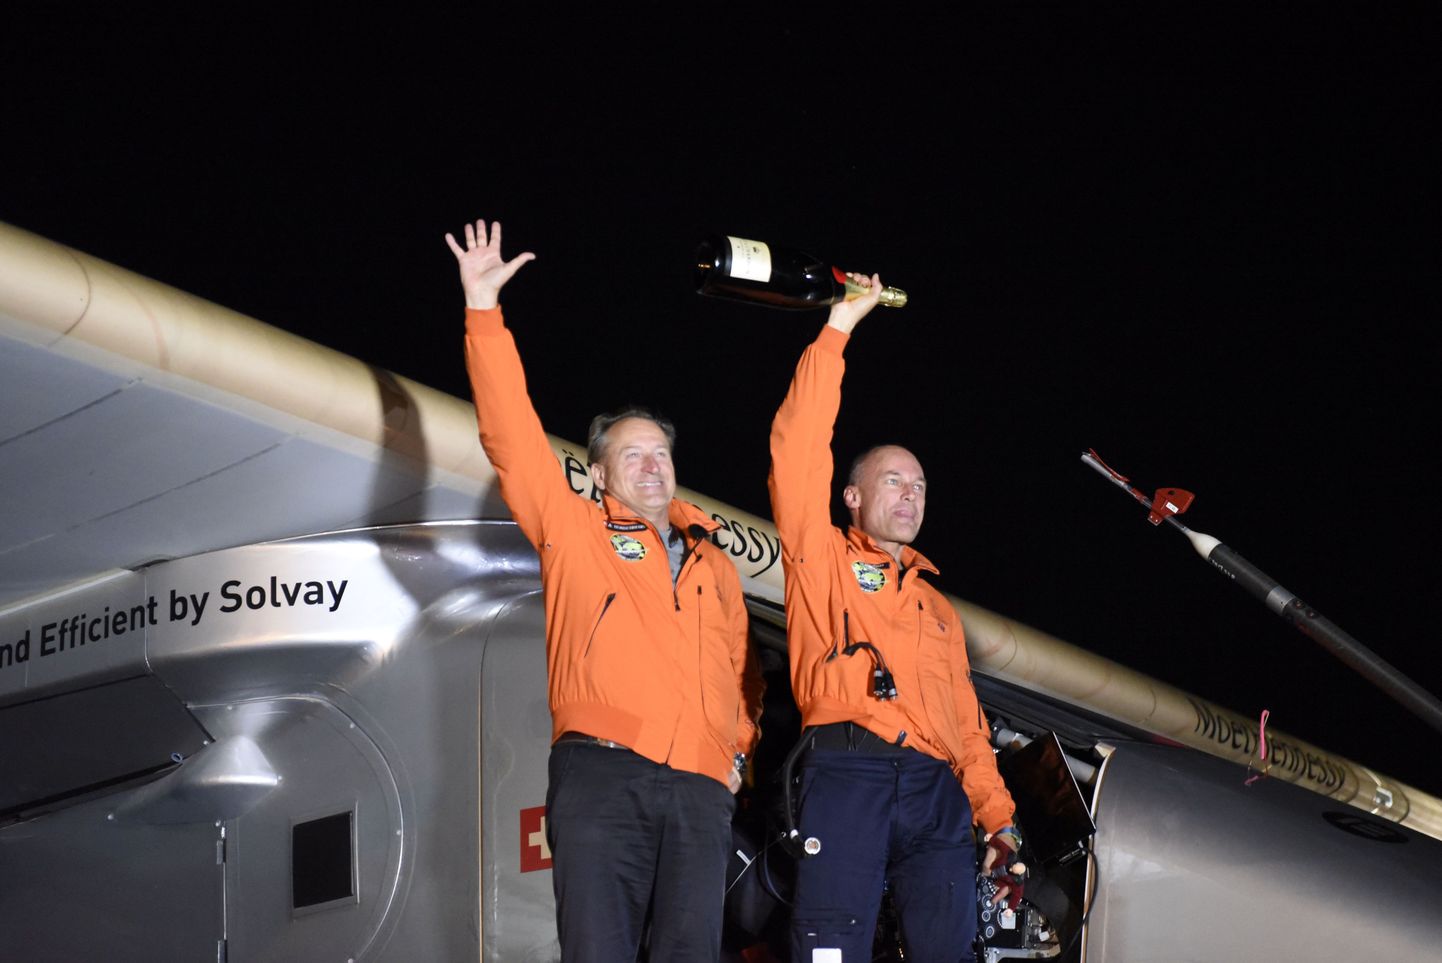 Solar Impulse 2 piloodid Bertrand Piccard (paremal) ja Andre Borschberg Leigh Valleys